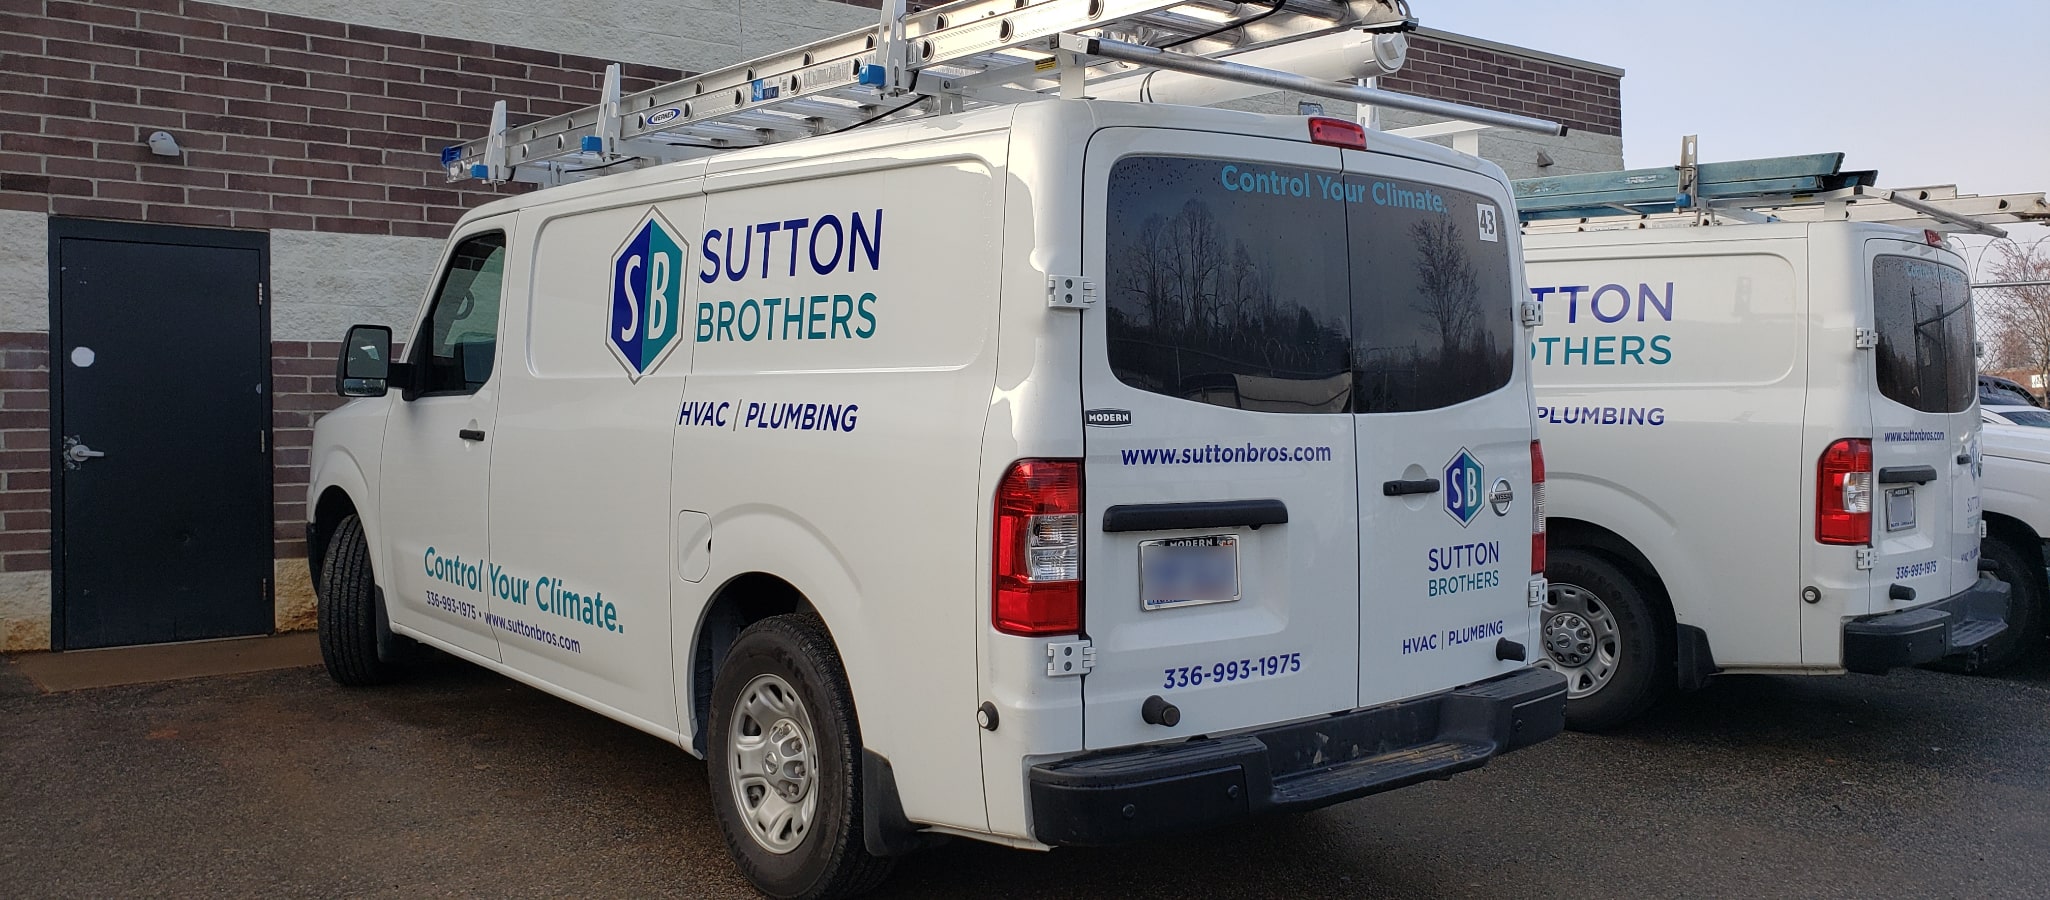 Sutton Brothers service vans.